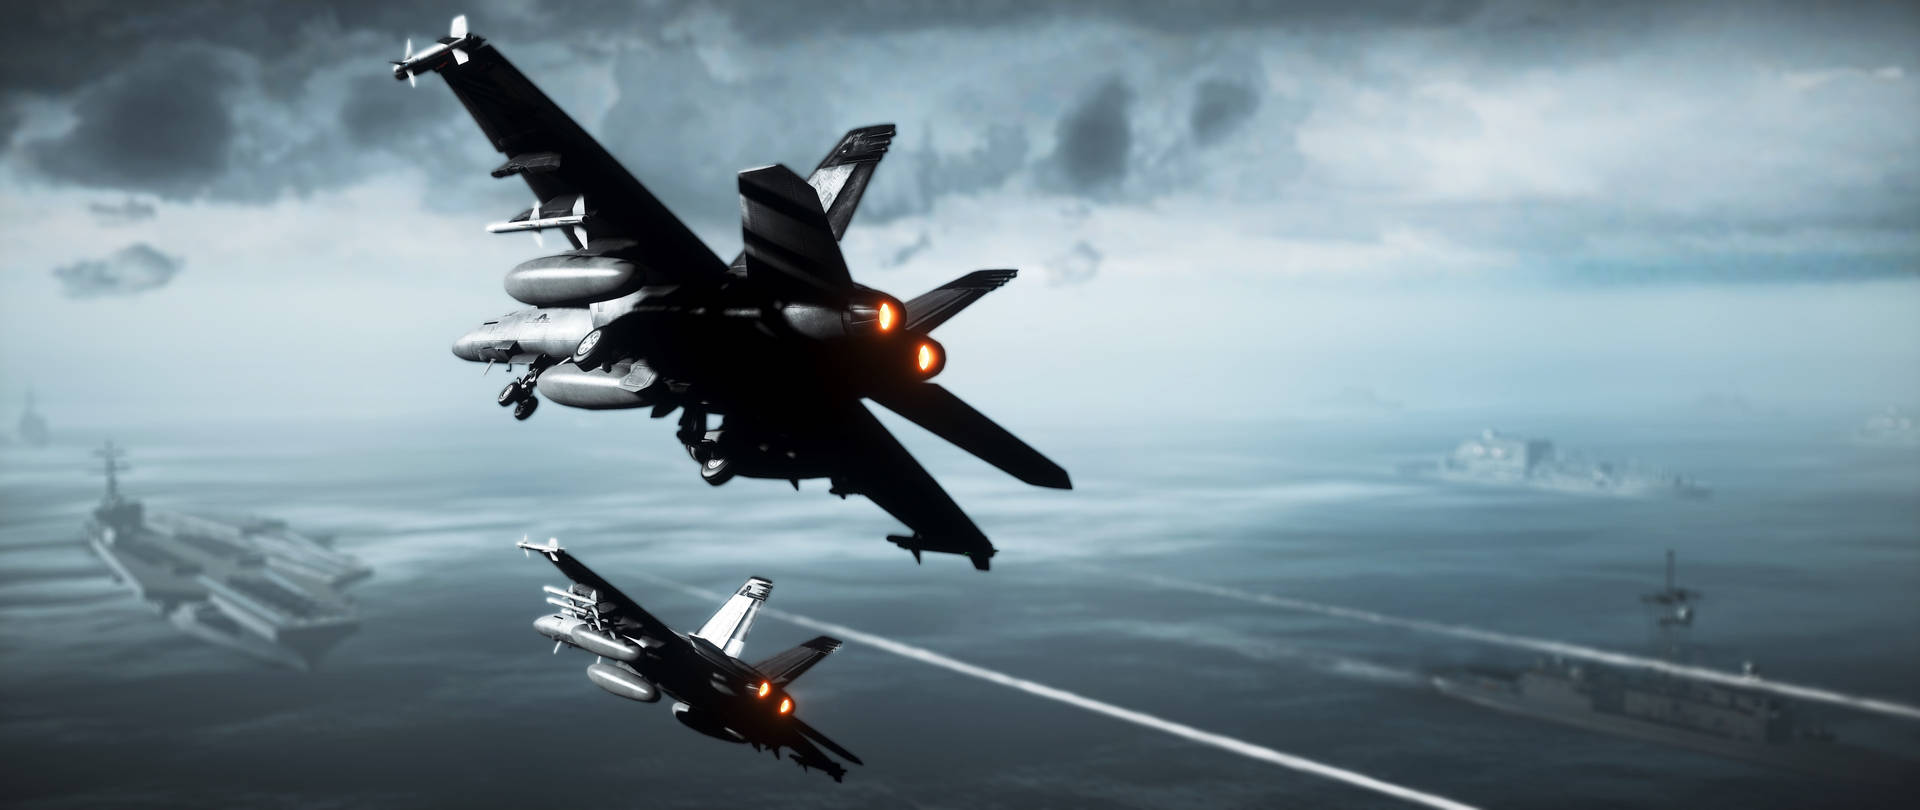 Download Cool Battlefield 3 Flying Fighter Jets Wallpaper | Wallpapers.com